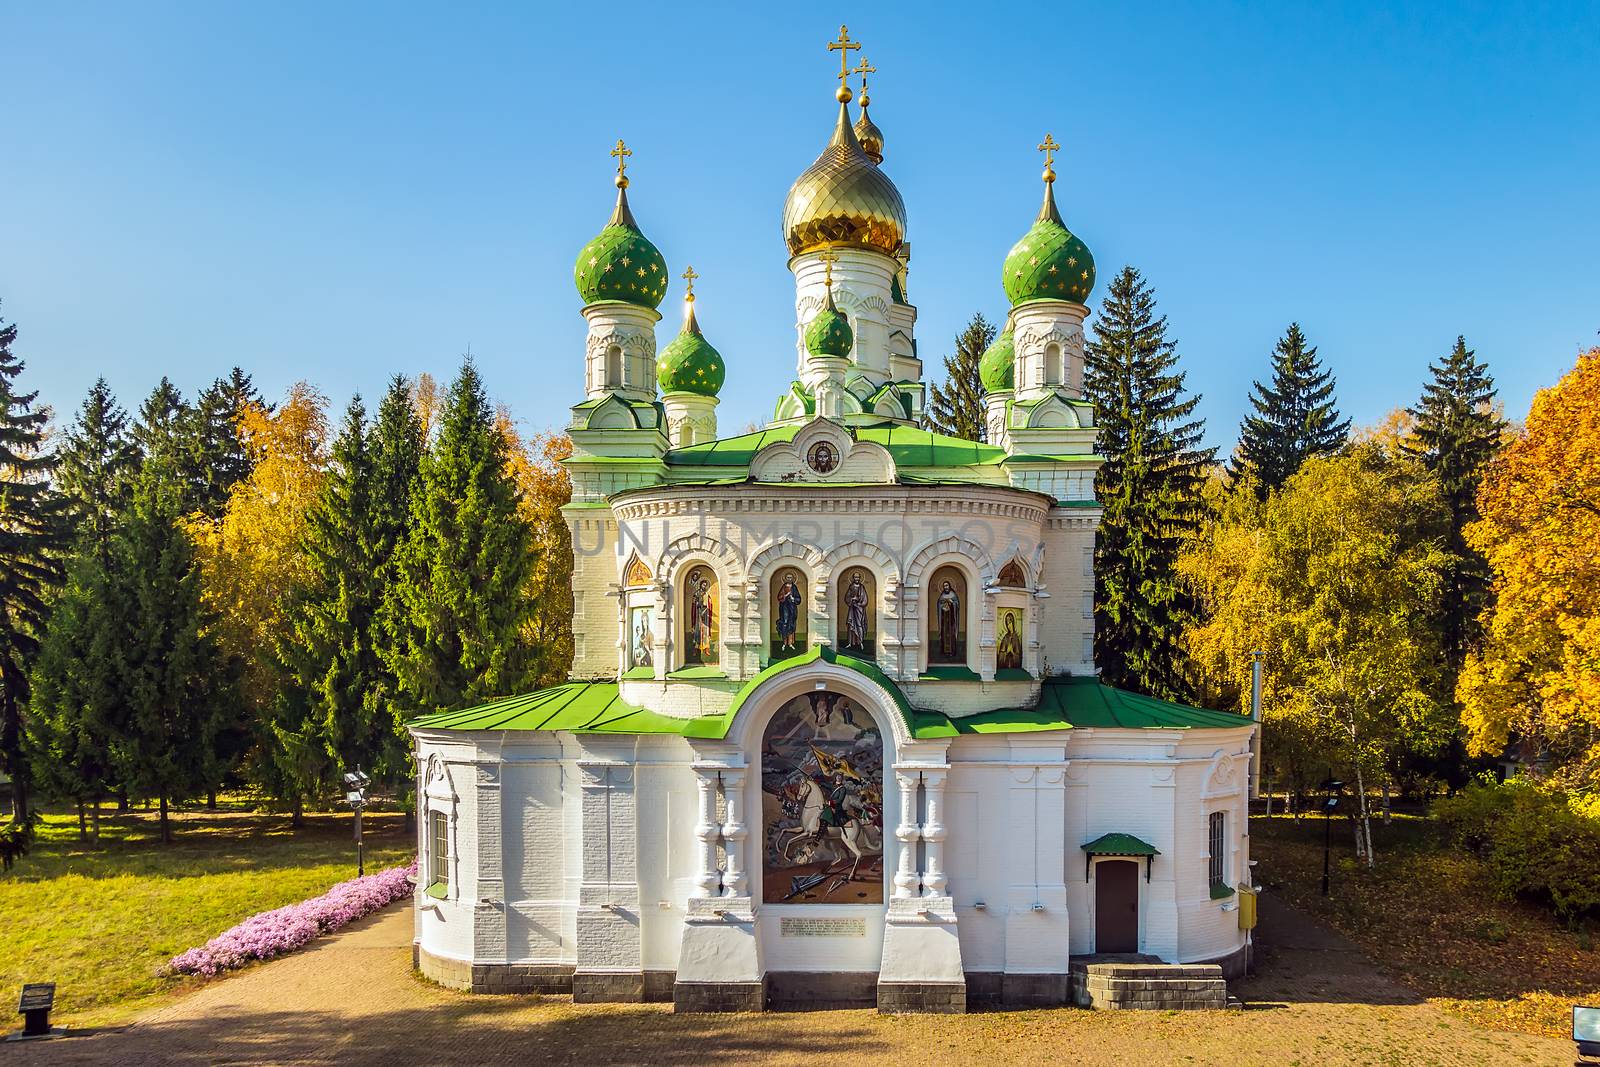 Orthodox Samson church on the battlefield Battle of Poltava, Ukrainian modernism. Reserve The Field of the Great Poltava Battle, UKRAINE